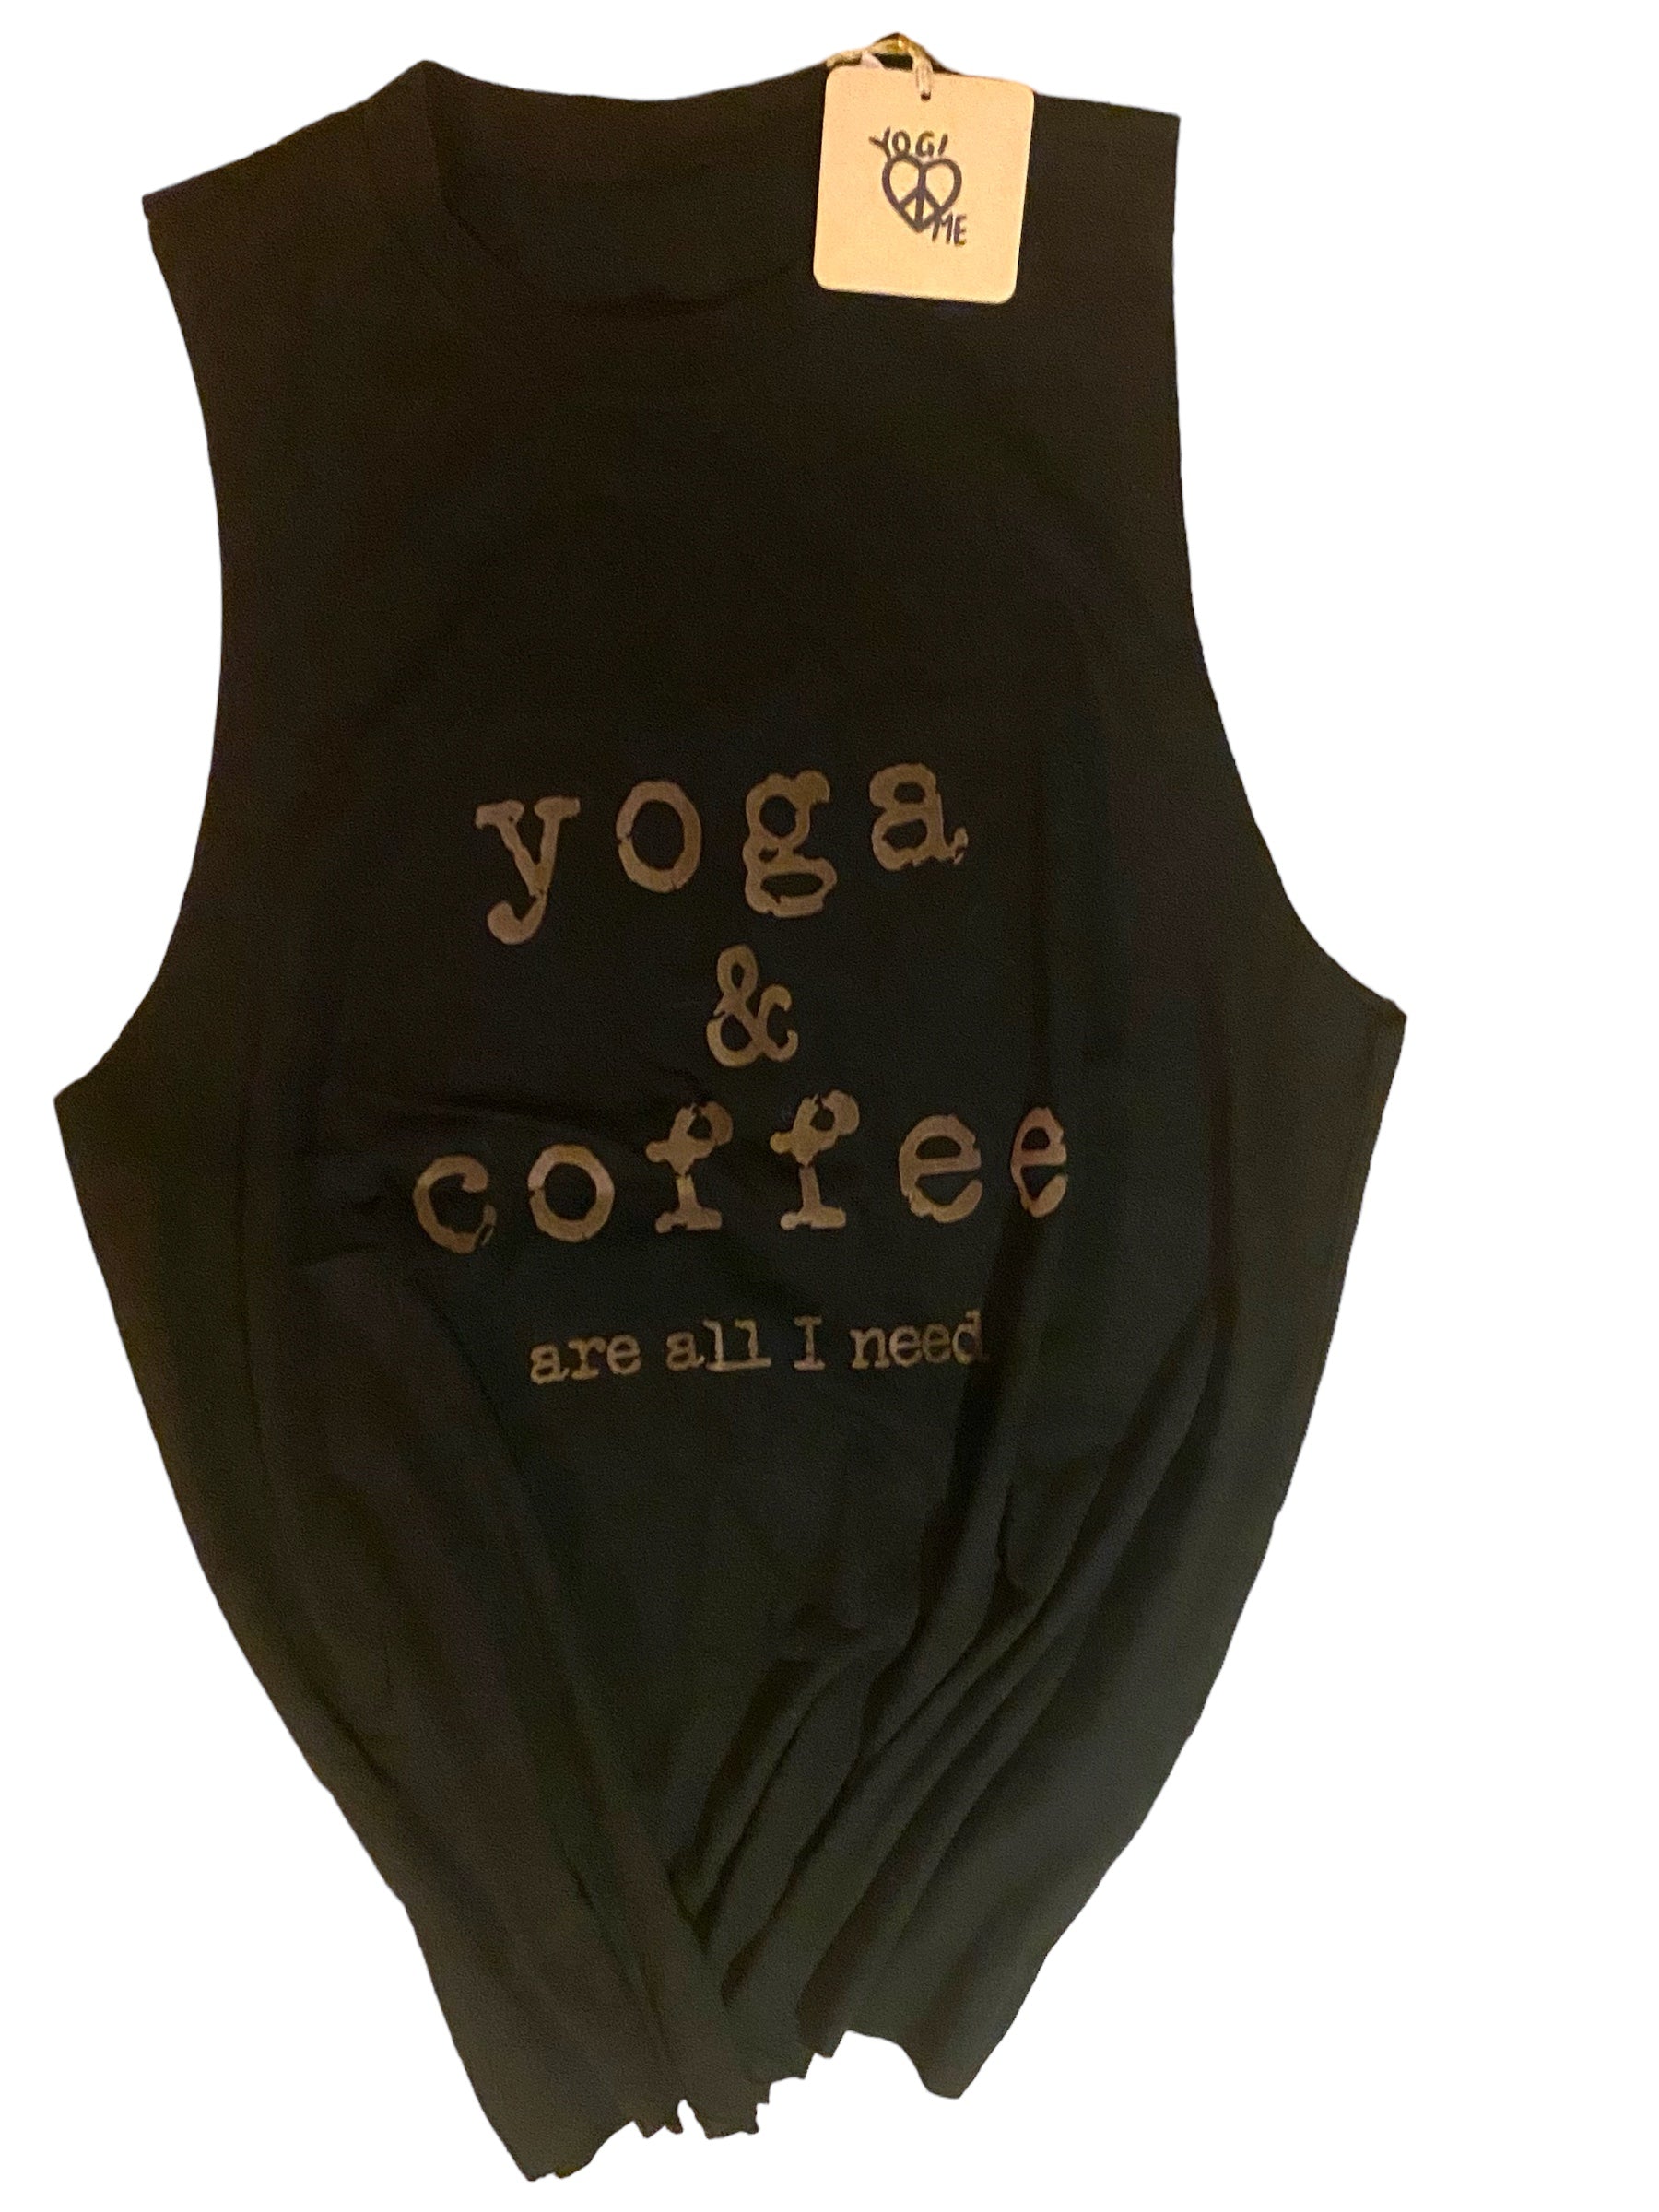 Yoga & coffee